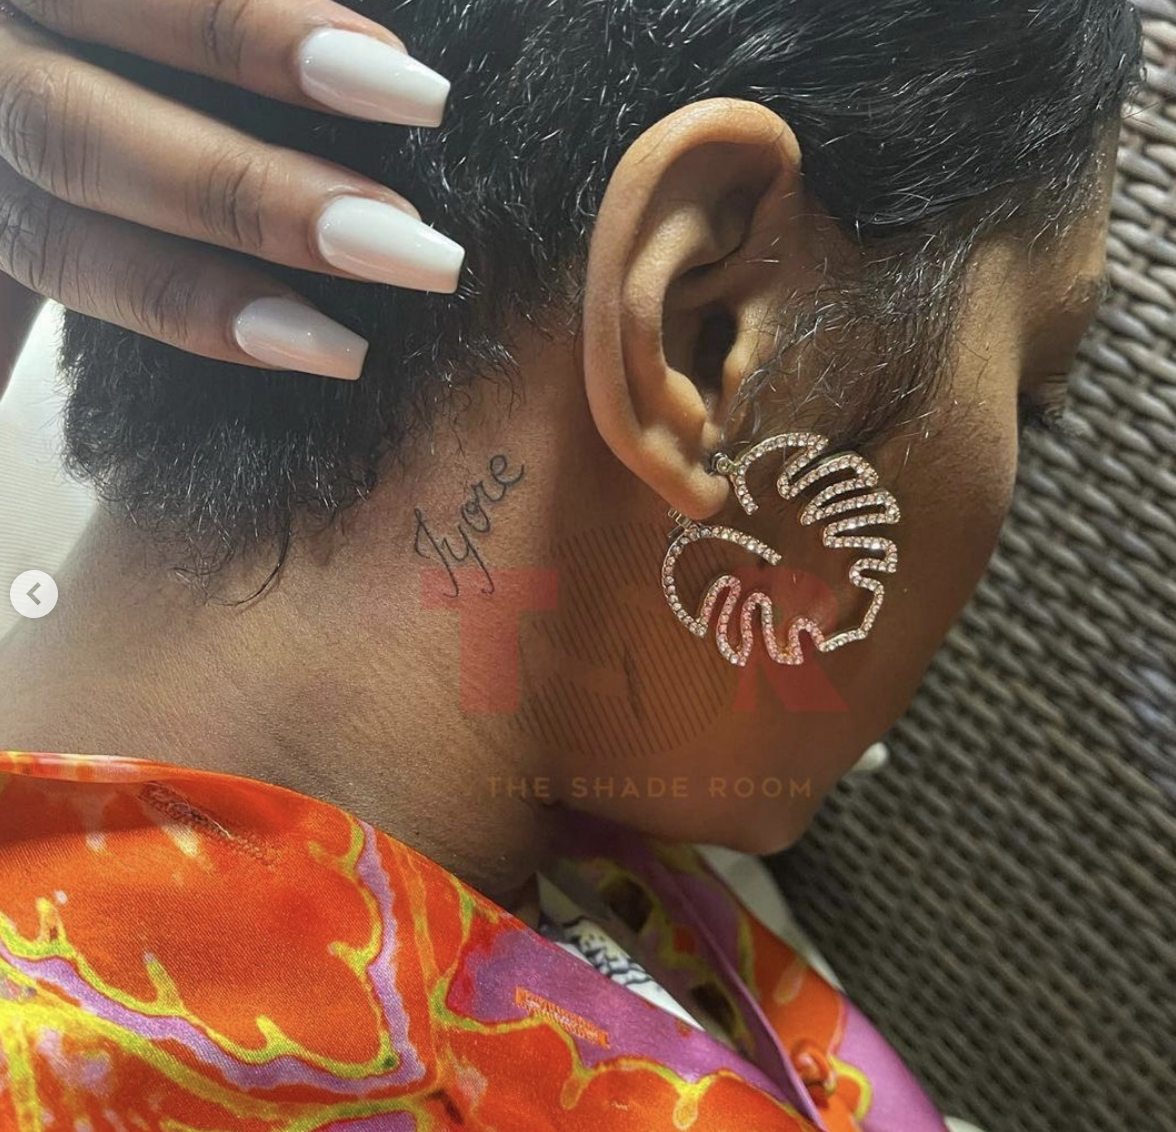 Drake gets tattoo honouring late designer Virgil Abloh